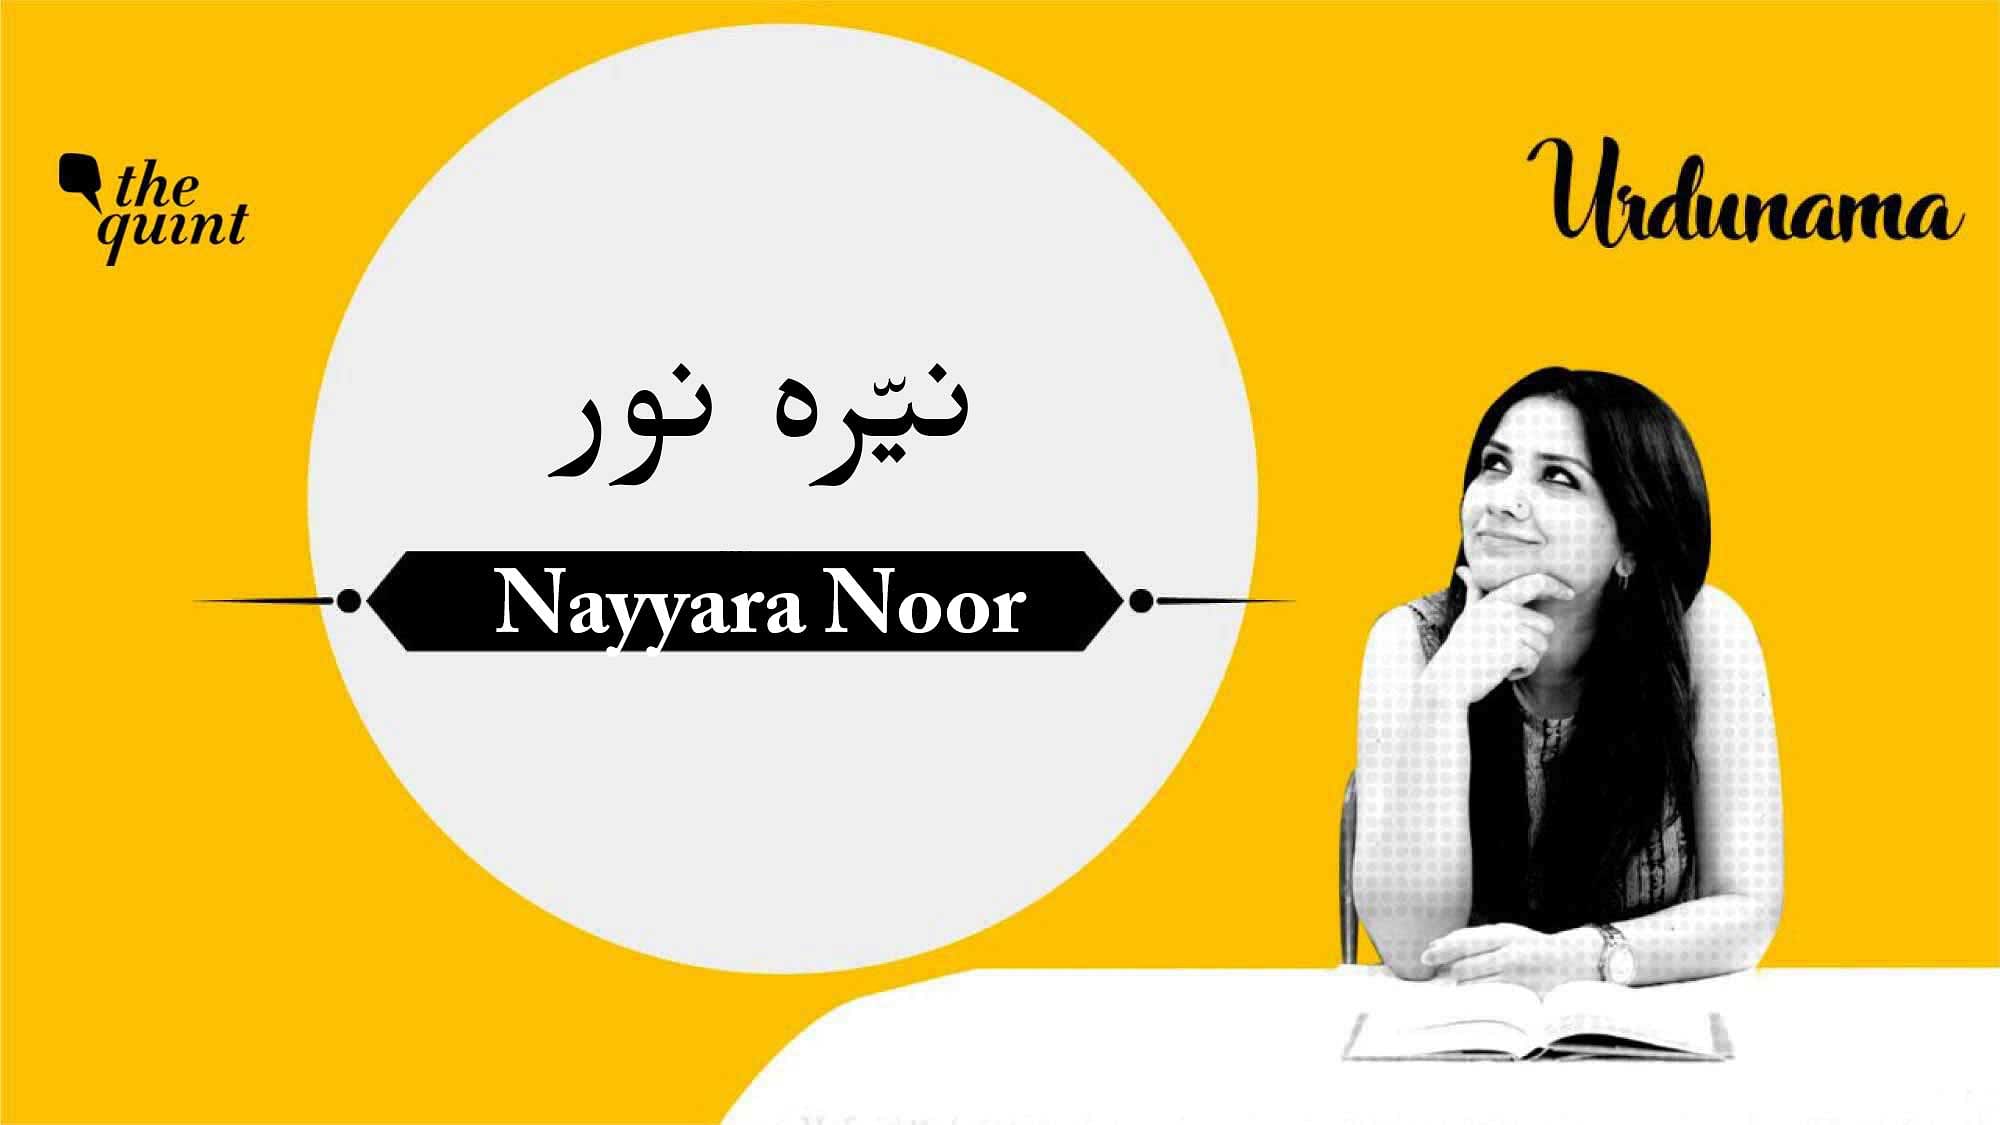 <div class="paragraphs"><p>Urdunama episode on Nayyara Noor's work.&nbsp;</p></div>